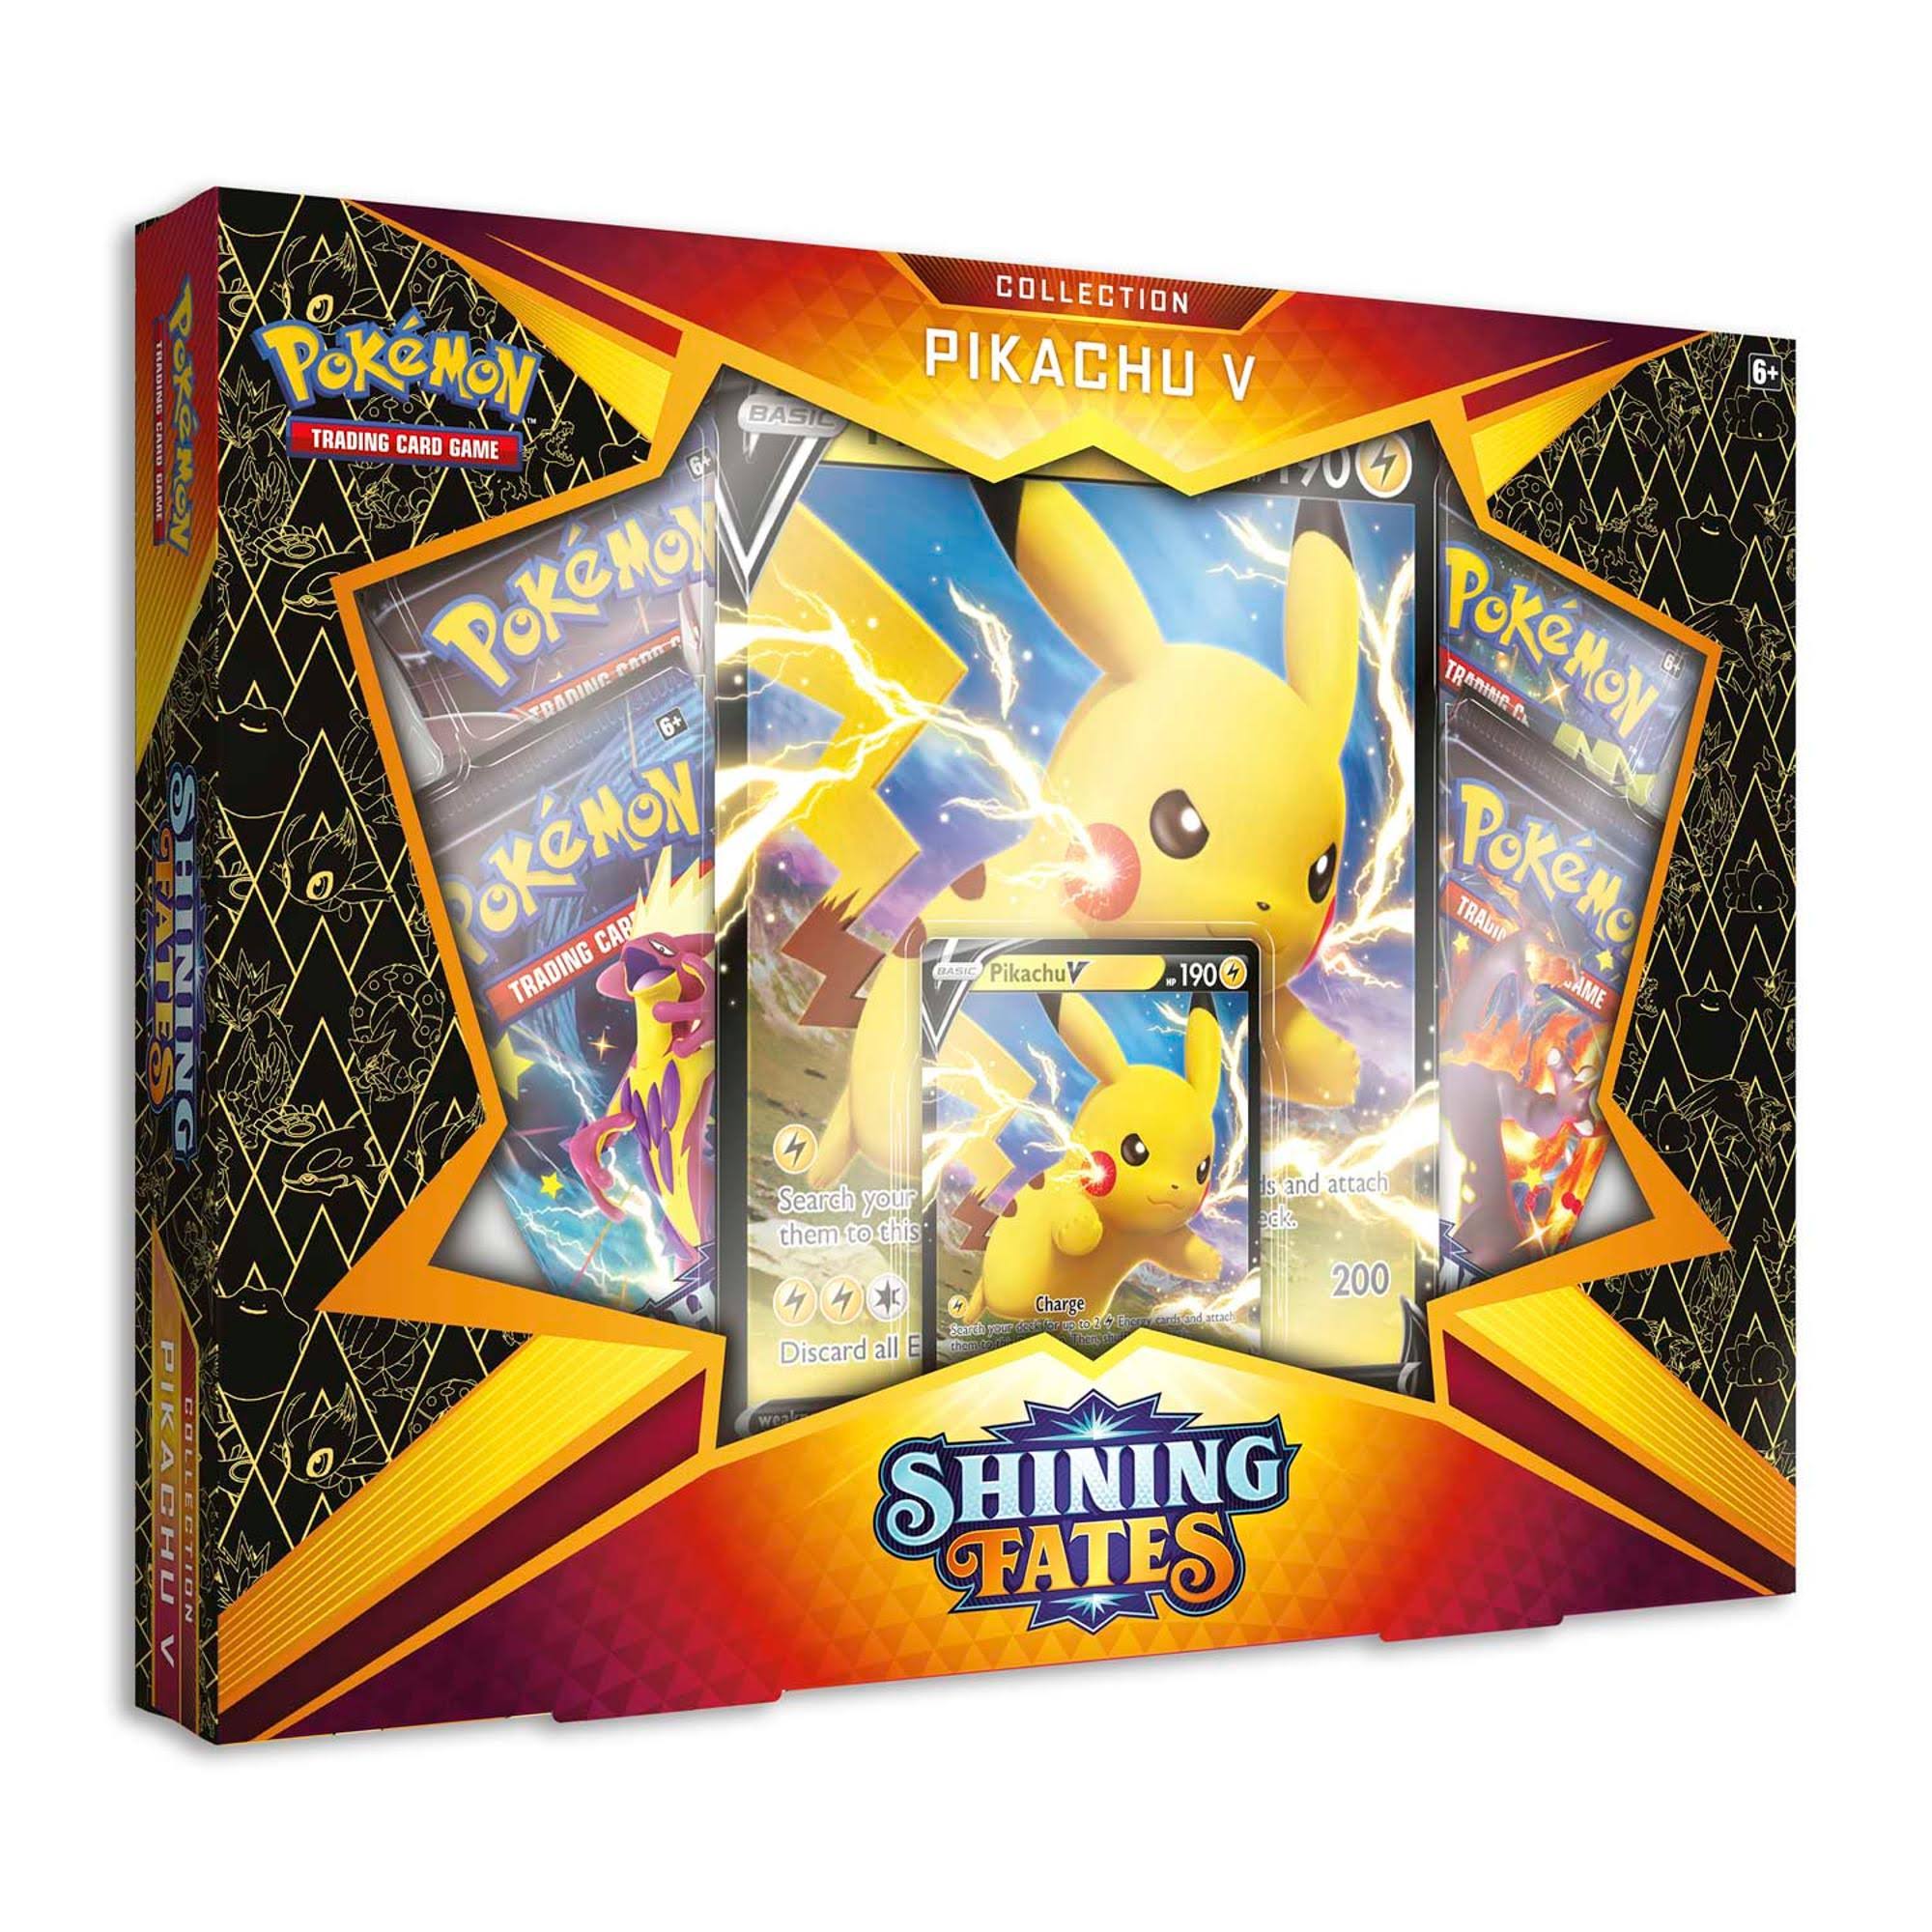 Pokemon Shining Fates: Pikachu V Collection Box